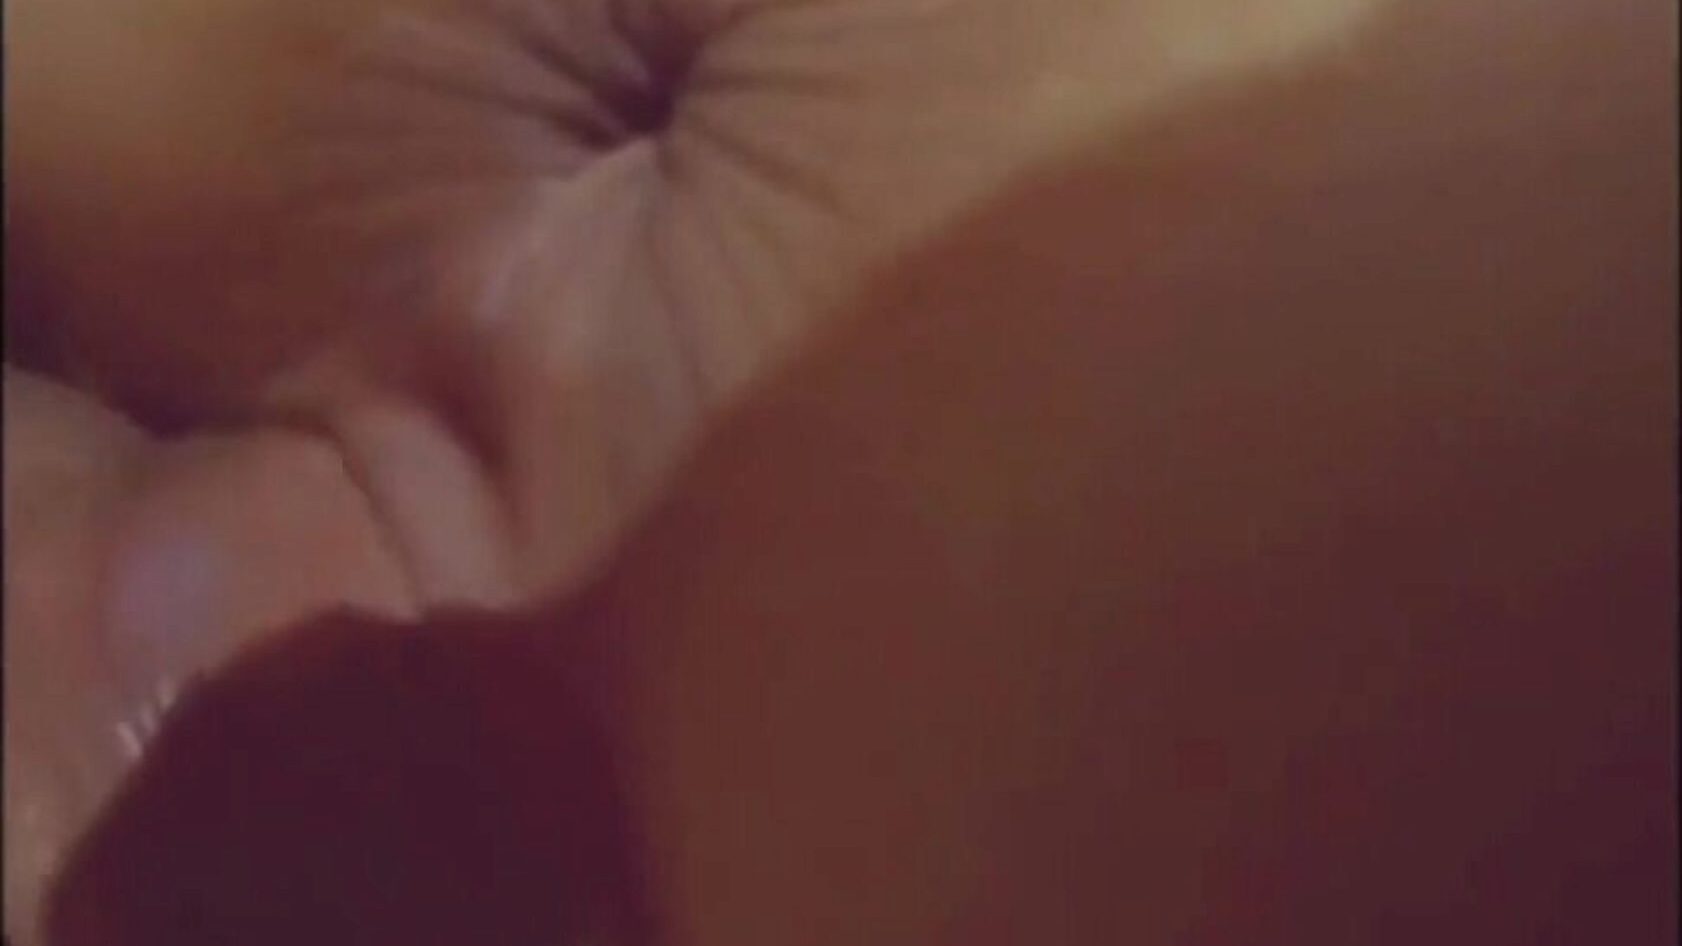 Wild Strong Cock Inside To Her Pussy - Open Holes! Instagram - Skinnyhotboygr